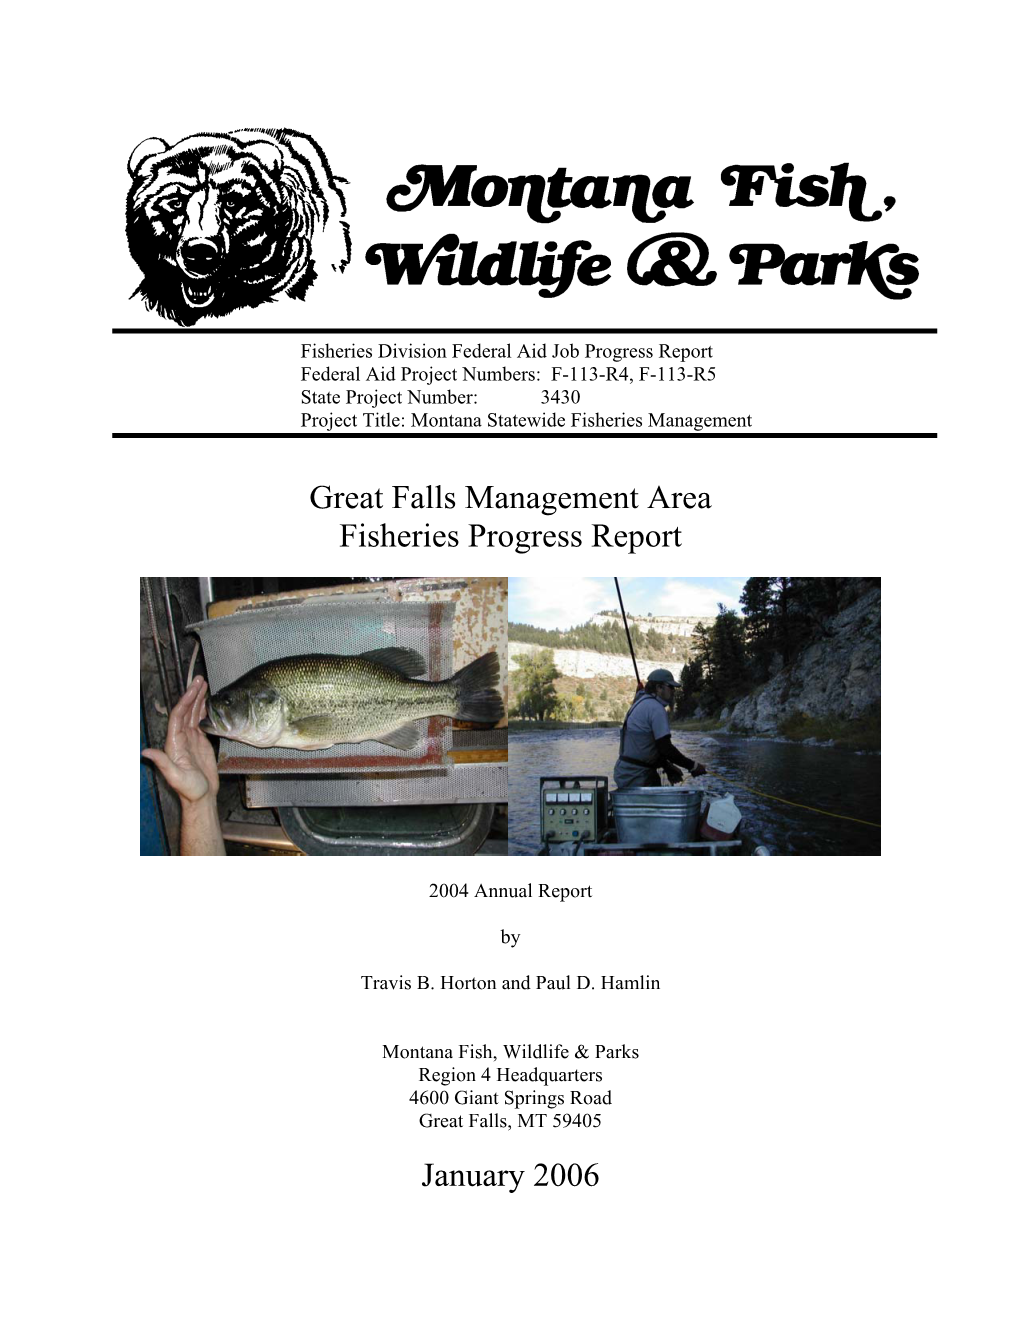 Great Falls Management Area Fisheries Progress Report January 2006